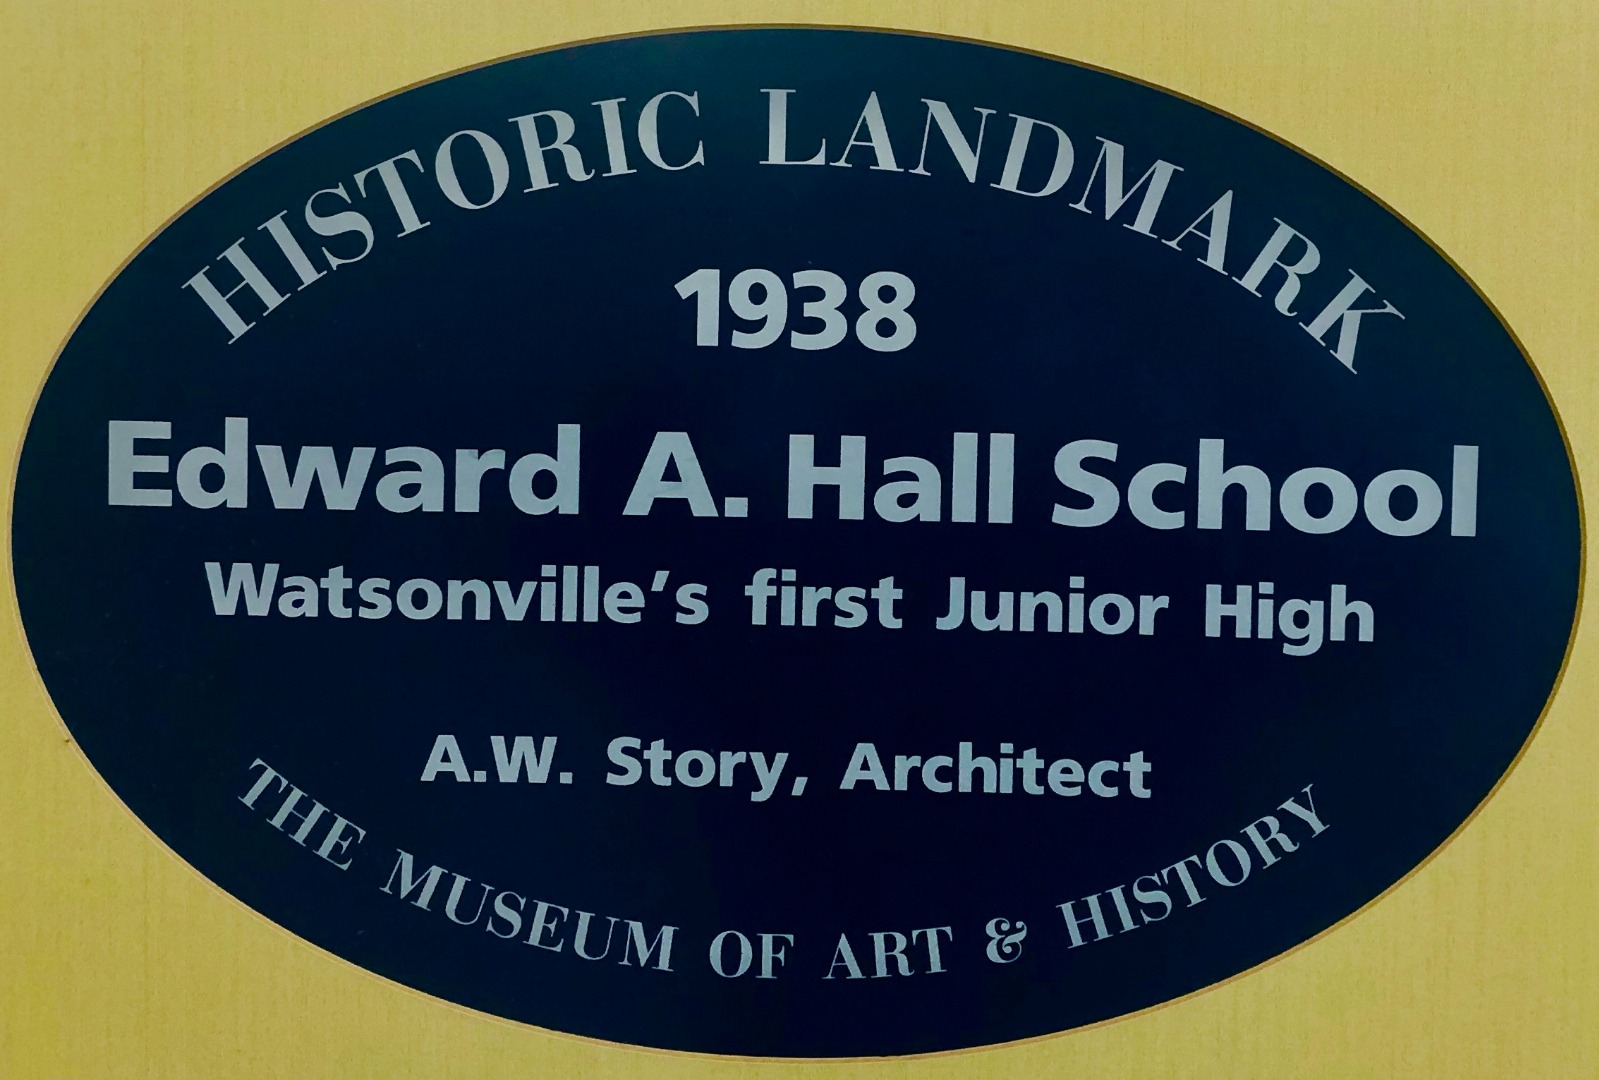 Historic landmark sign for Edward A. Hall School